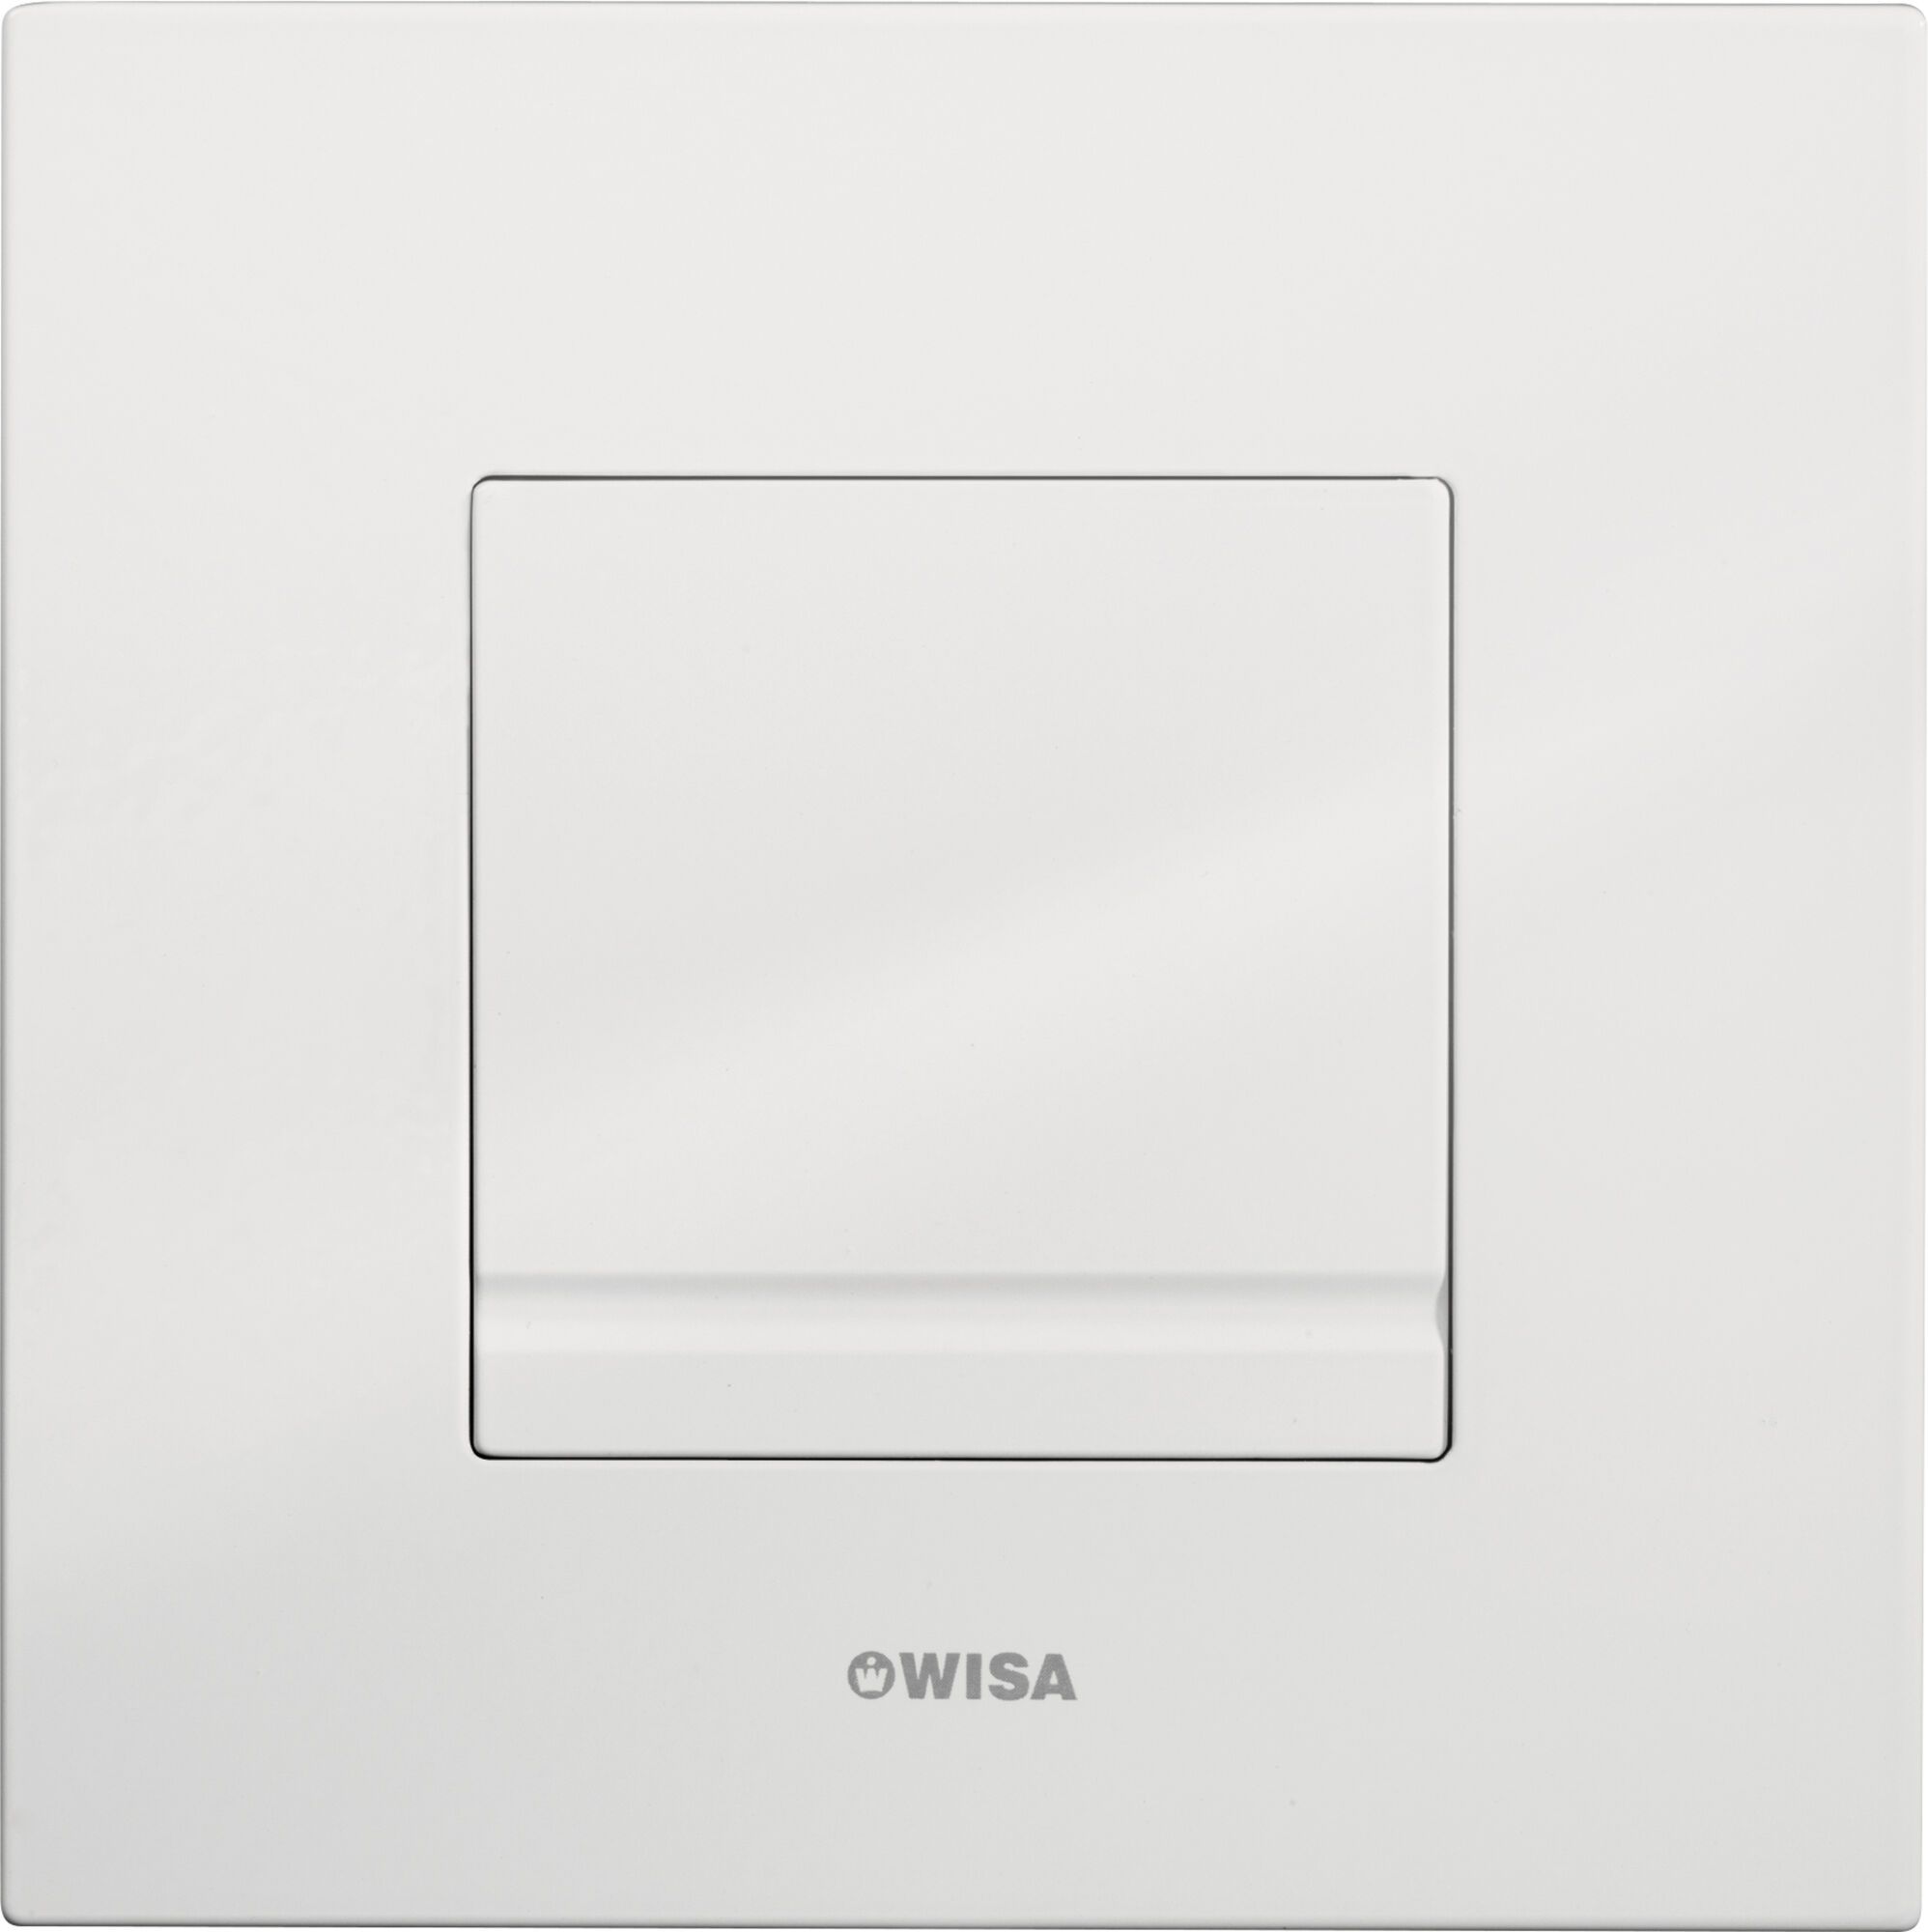 XS Control panel Delos metal white urinal